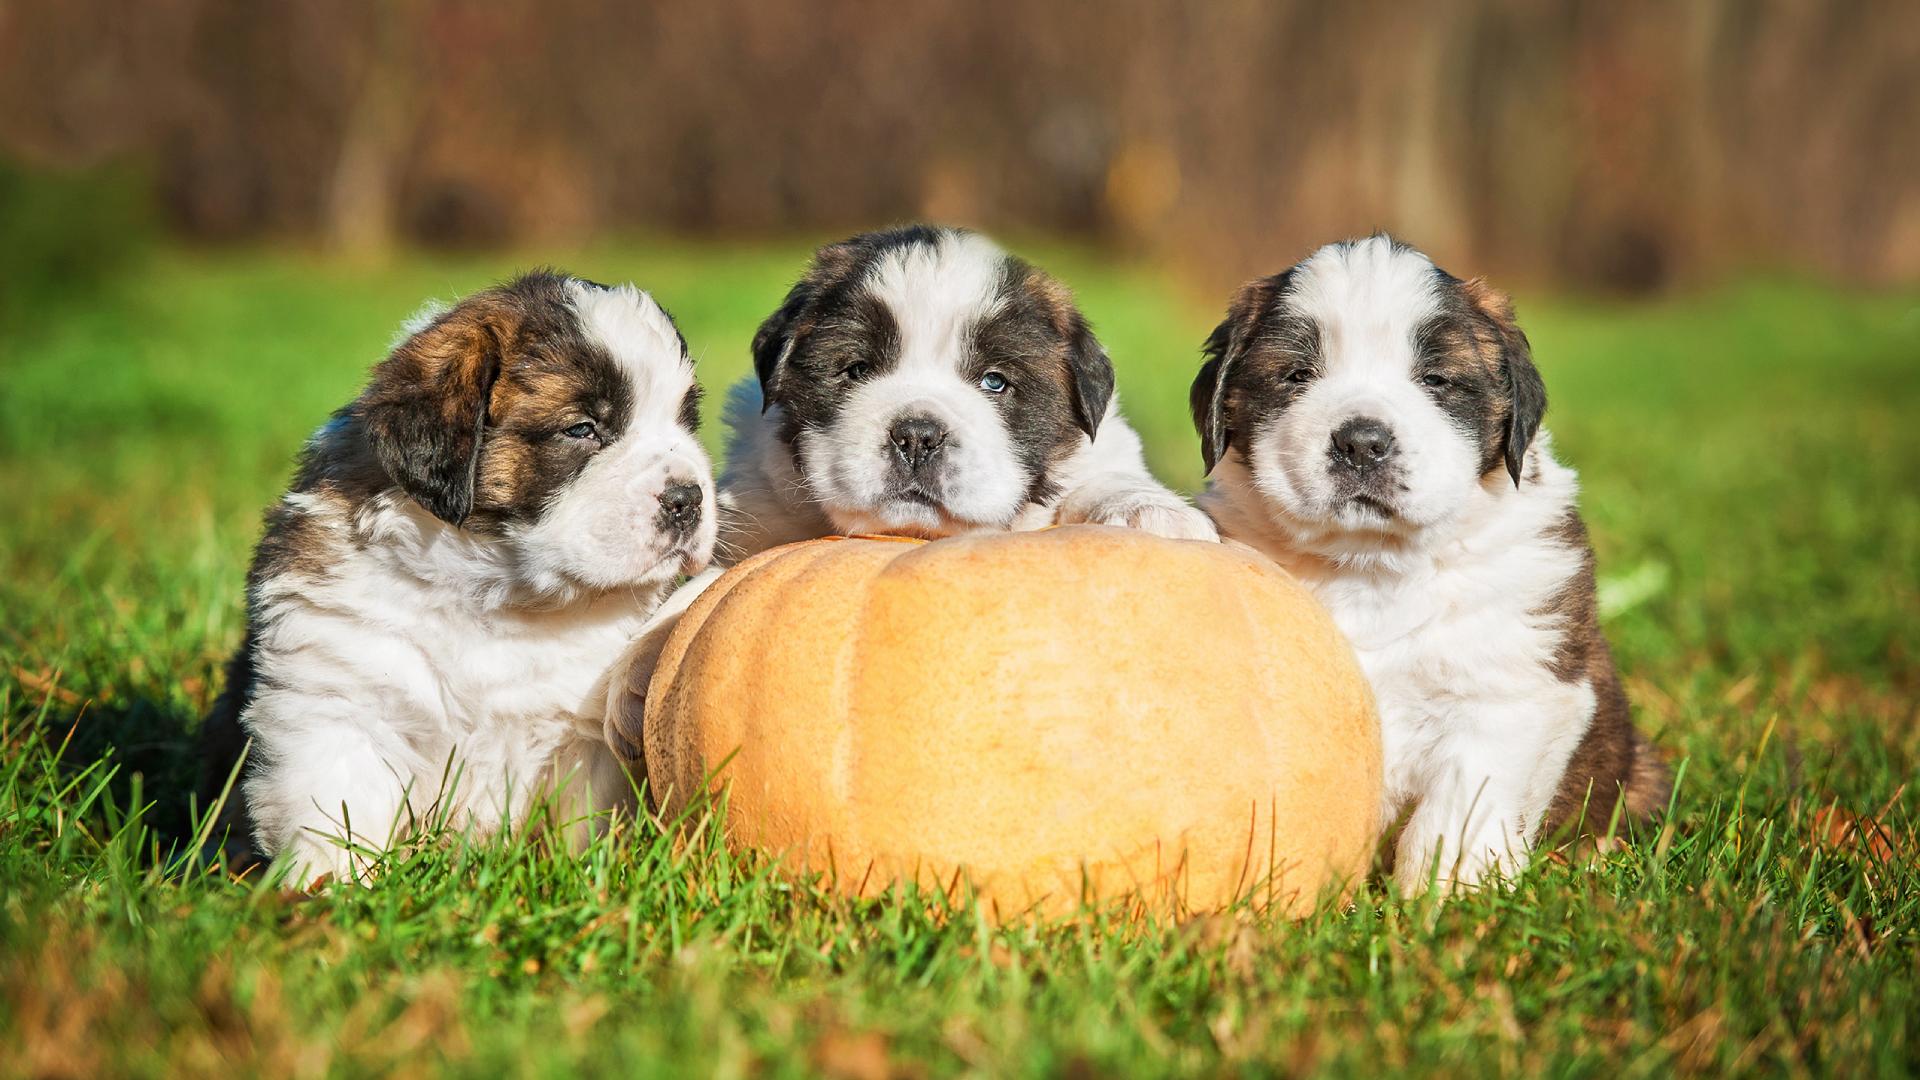 puppies sitting by a pumpkin